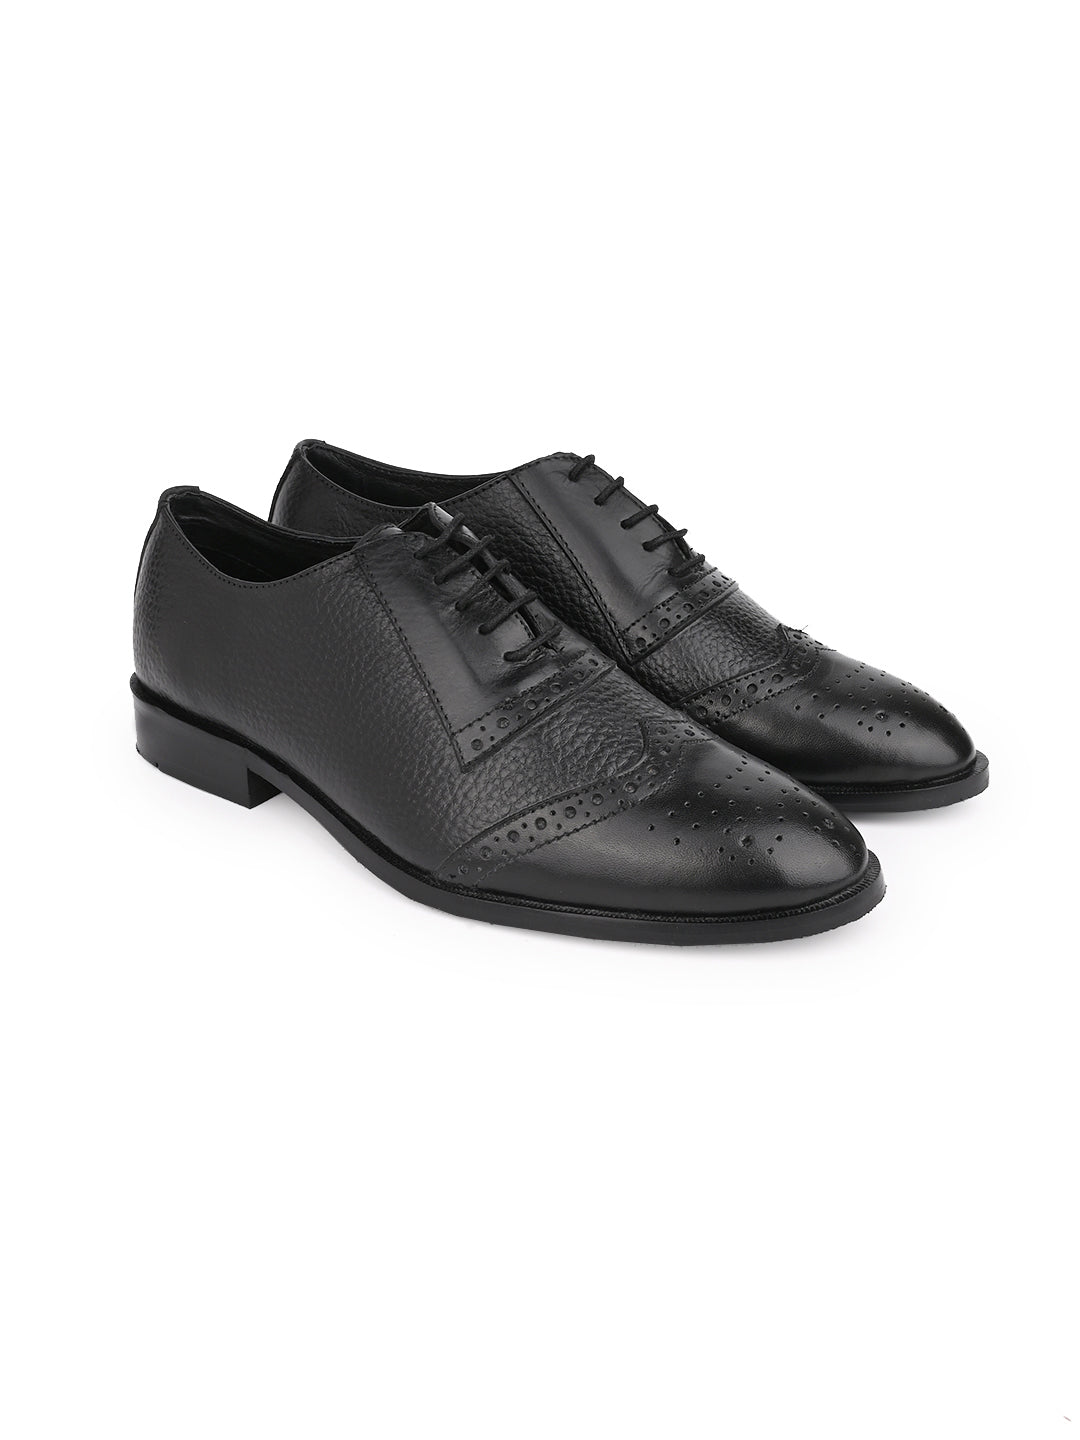 Men Black Textured Brogue Oxford Formal Shoes